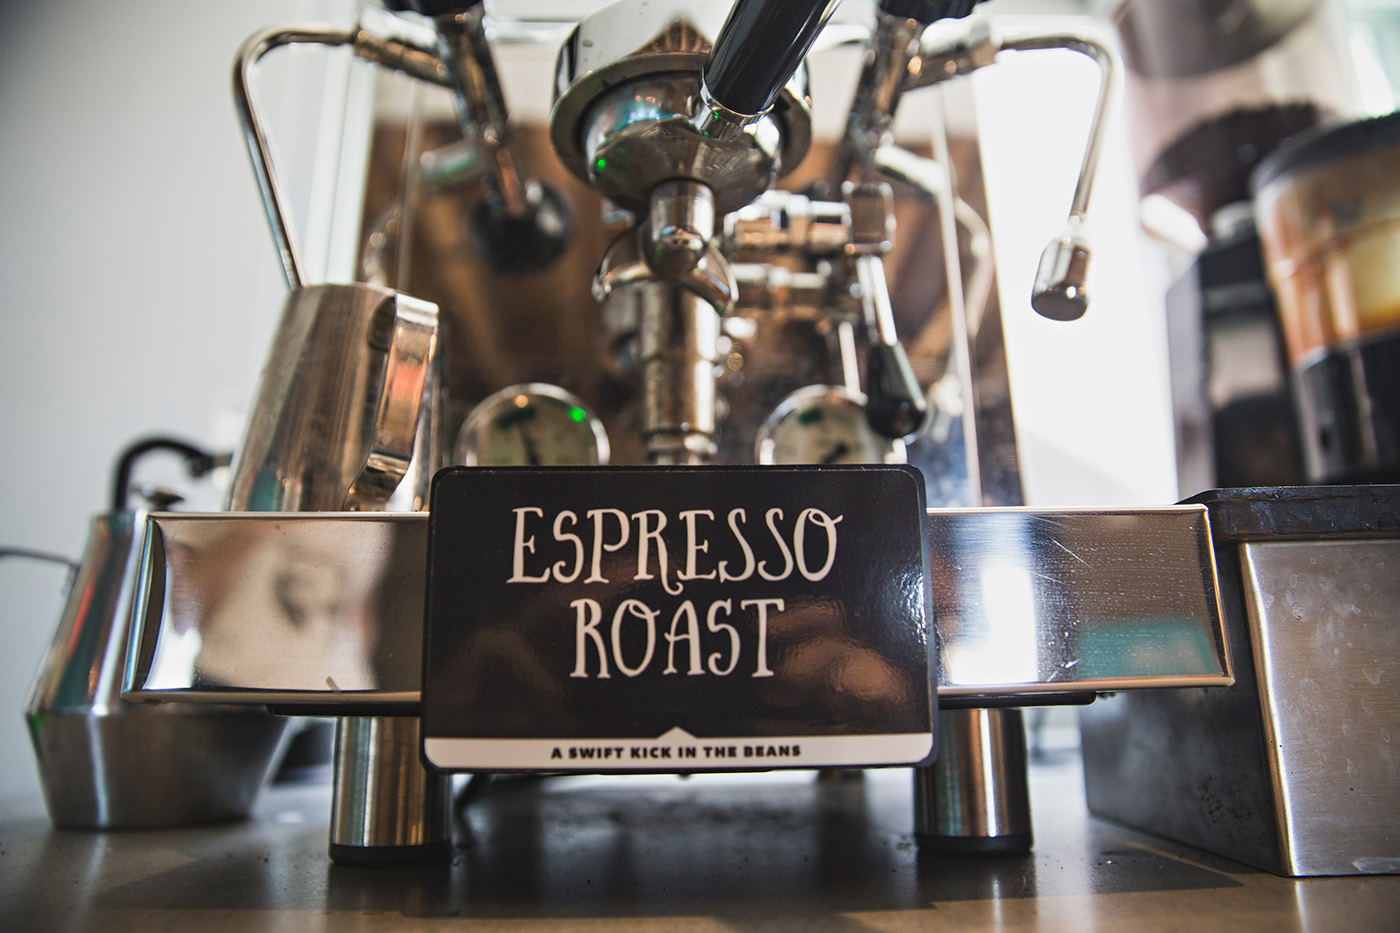 Rebrand brand identity Coffee cup design dash in cafe Collateral